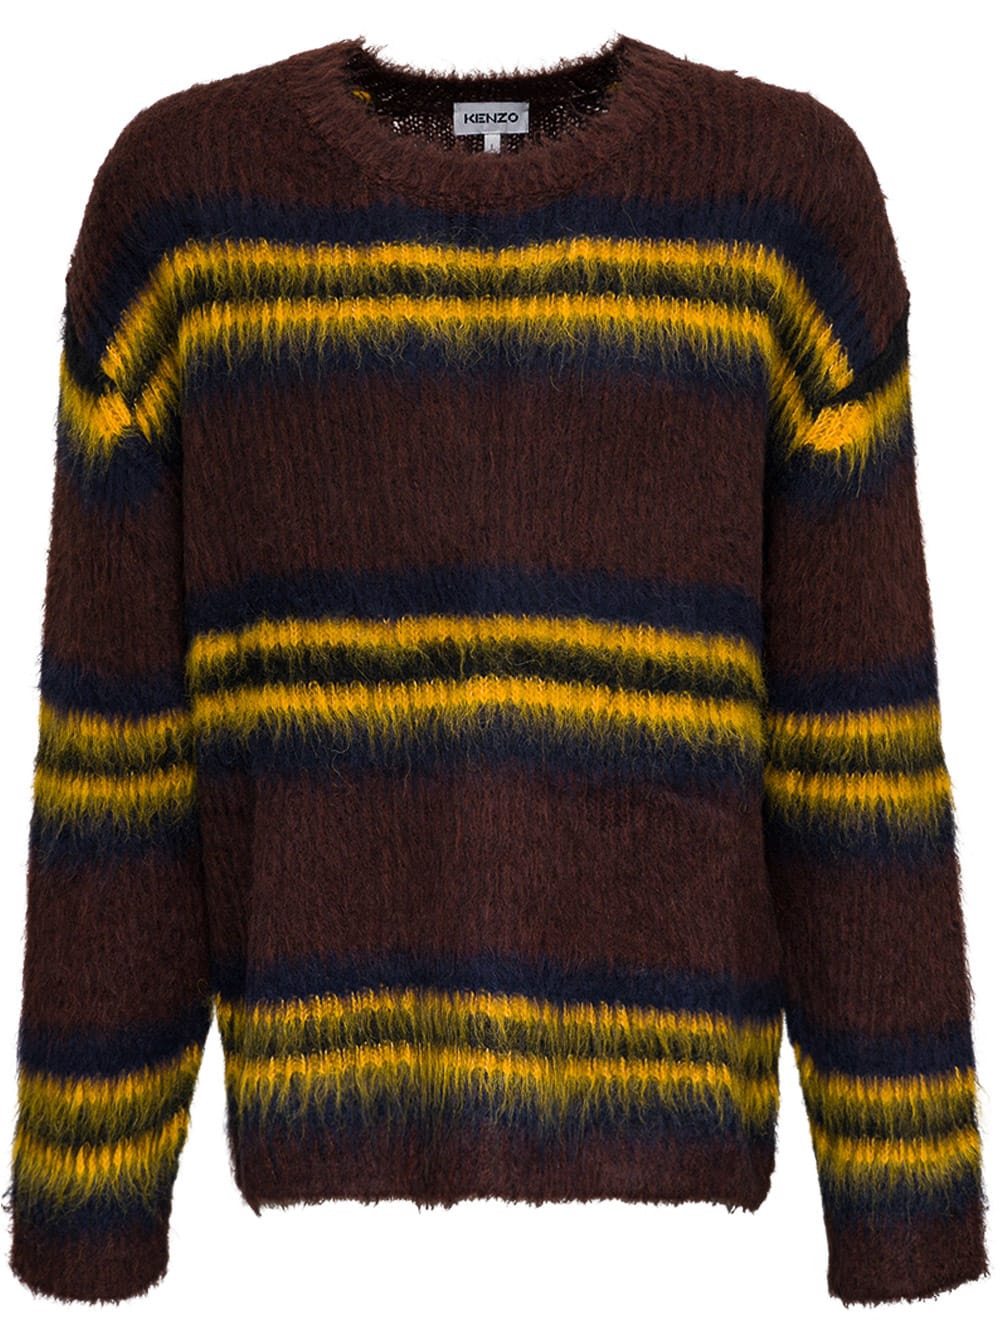 Kenzo Multicolor Striped Wool Sweater